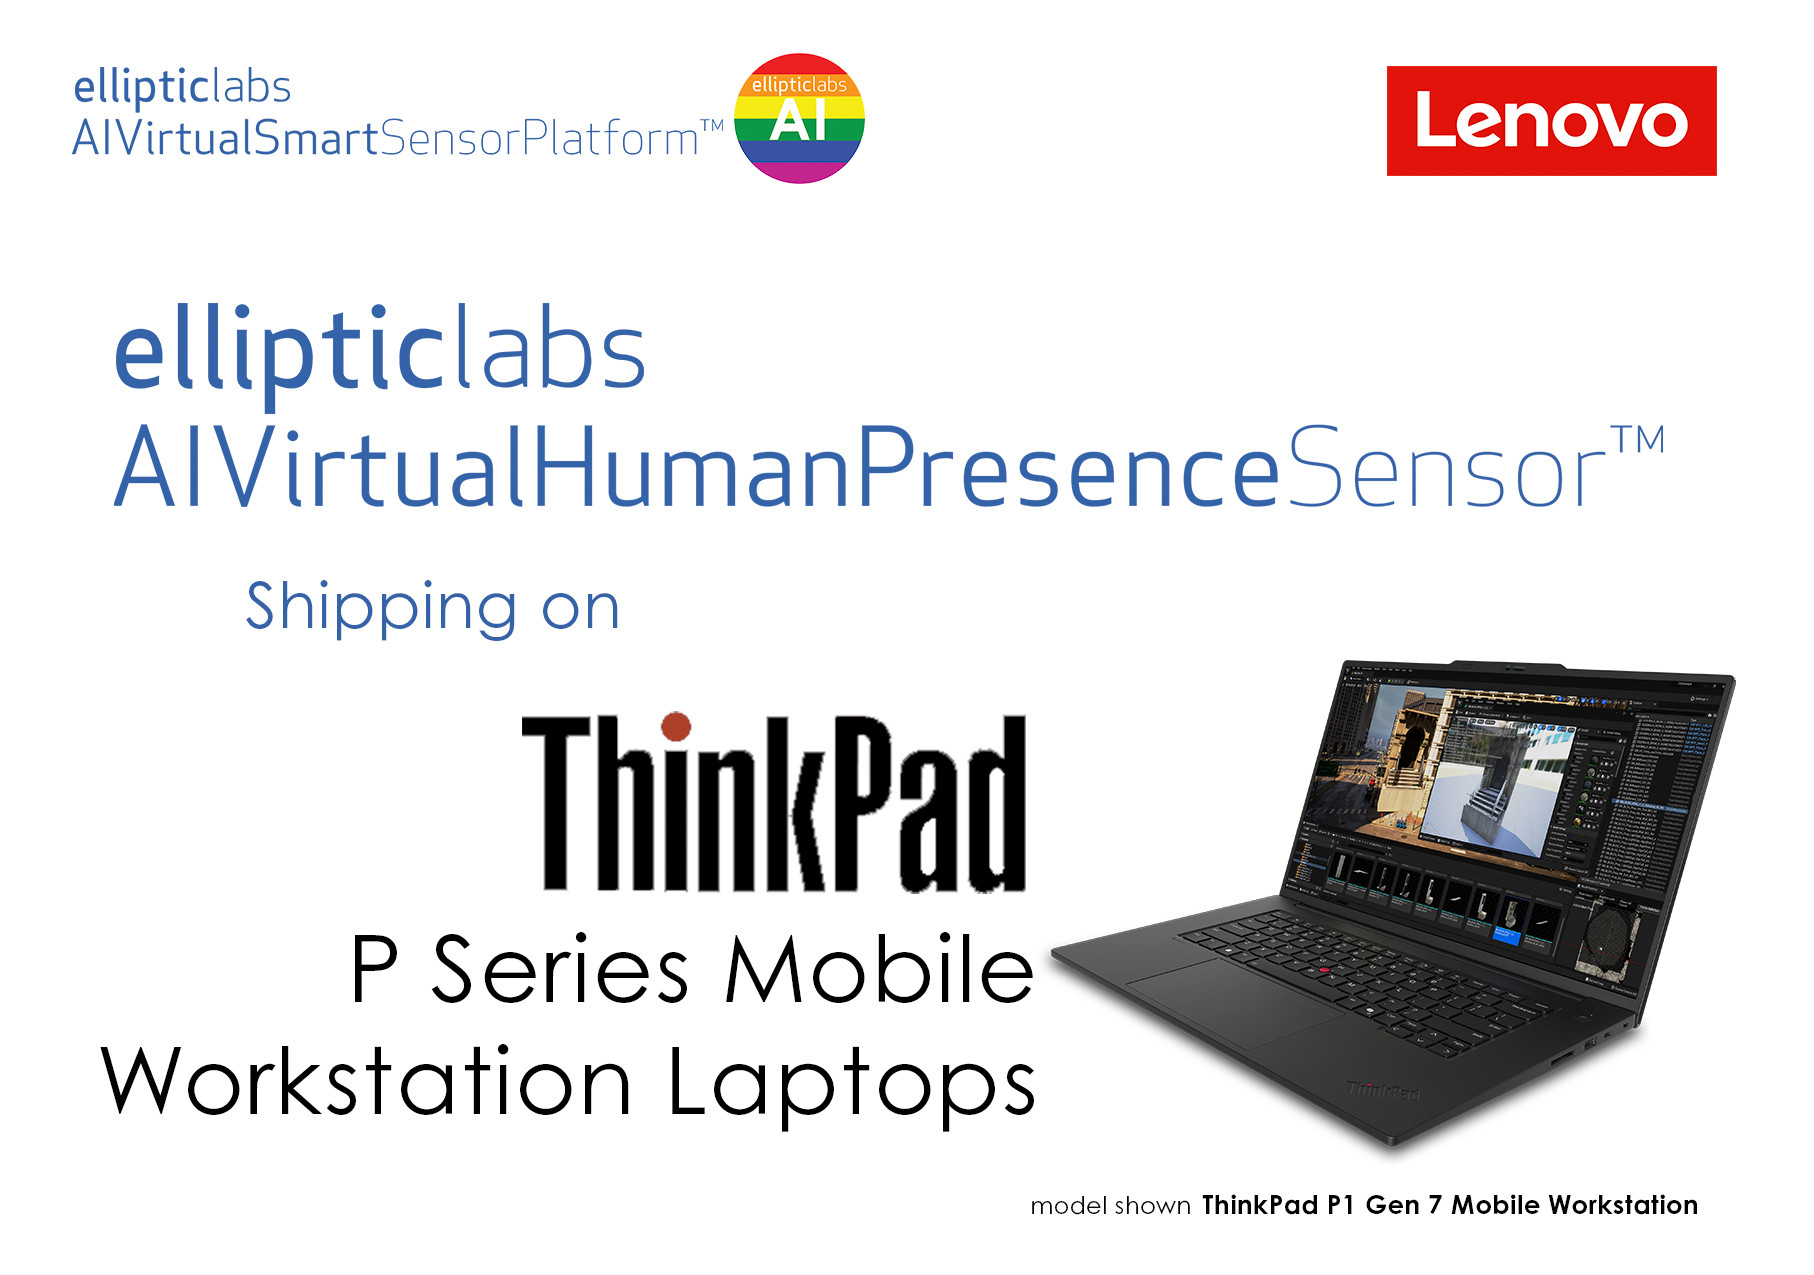 Elliptic Labs Shipping Its AI Software Platform on Lenovo’s Newest ThinkPad™ P Series Workstation Laptops